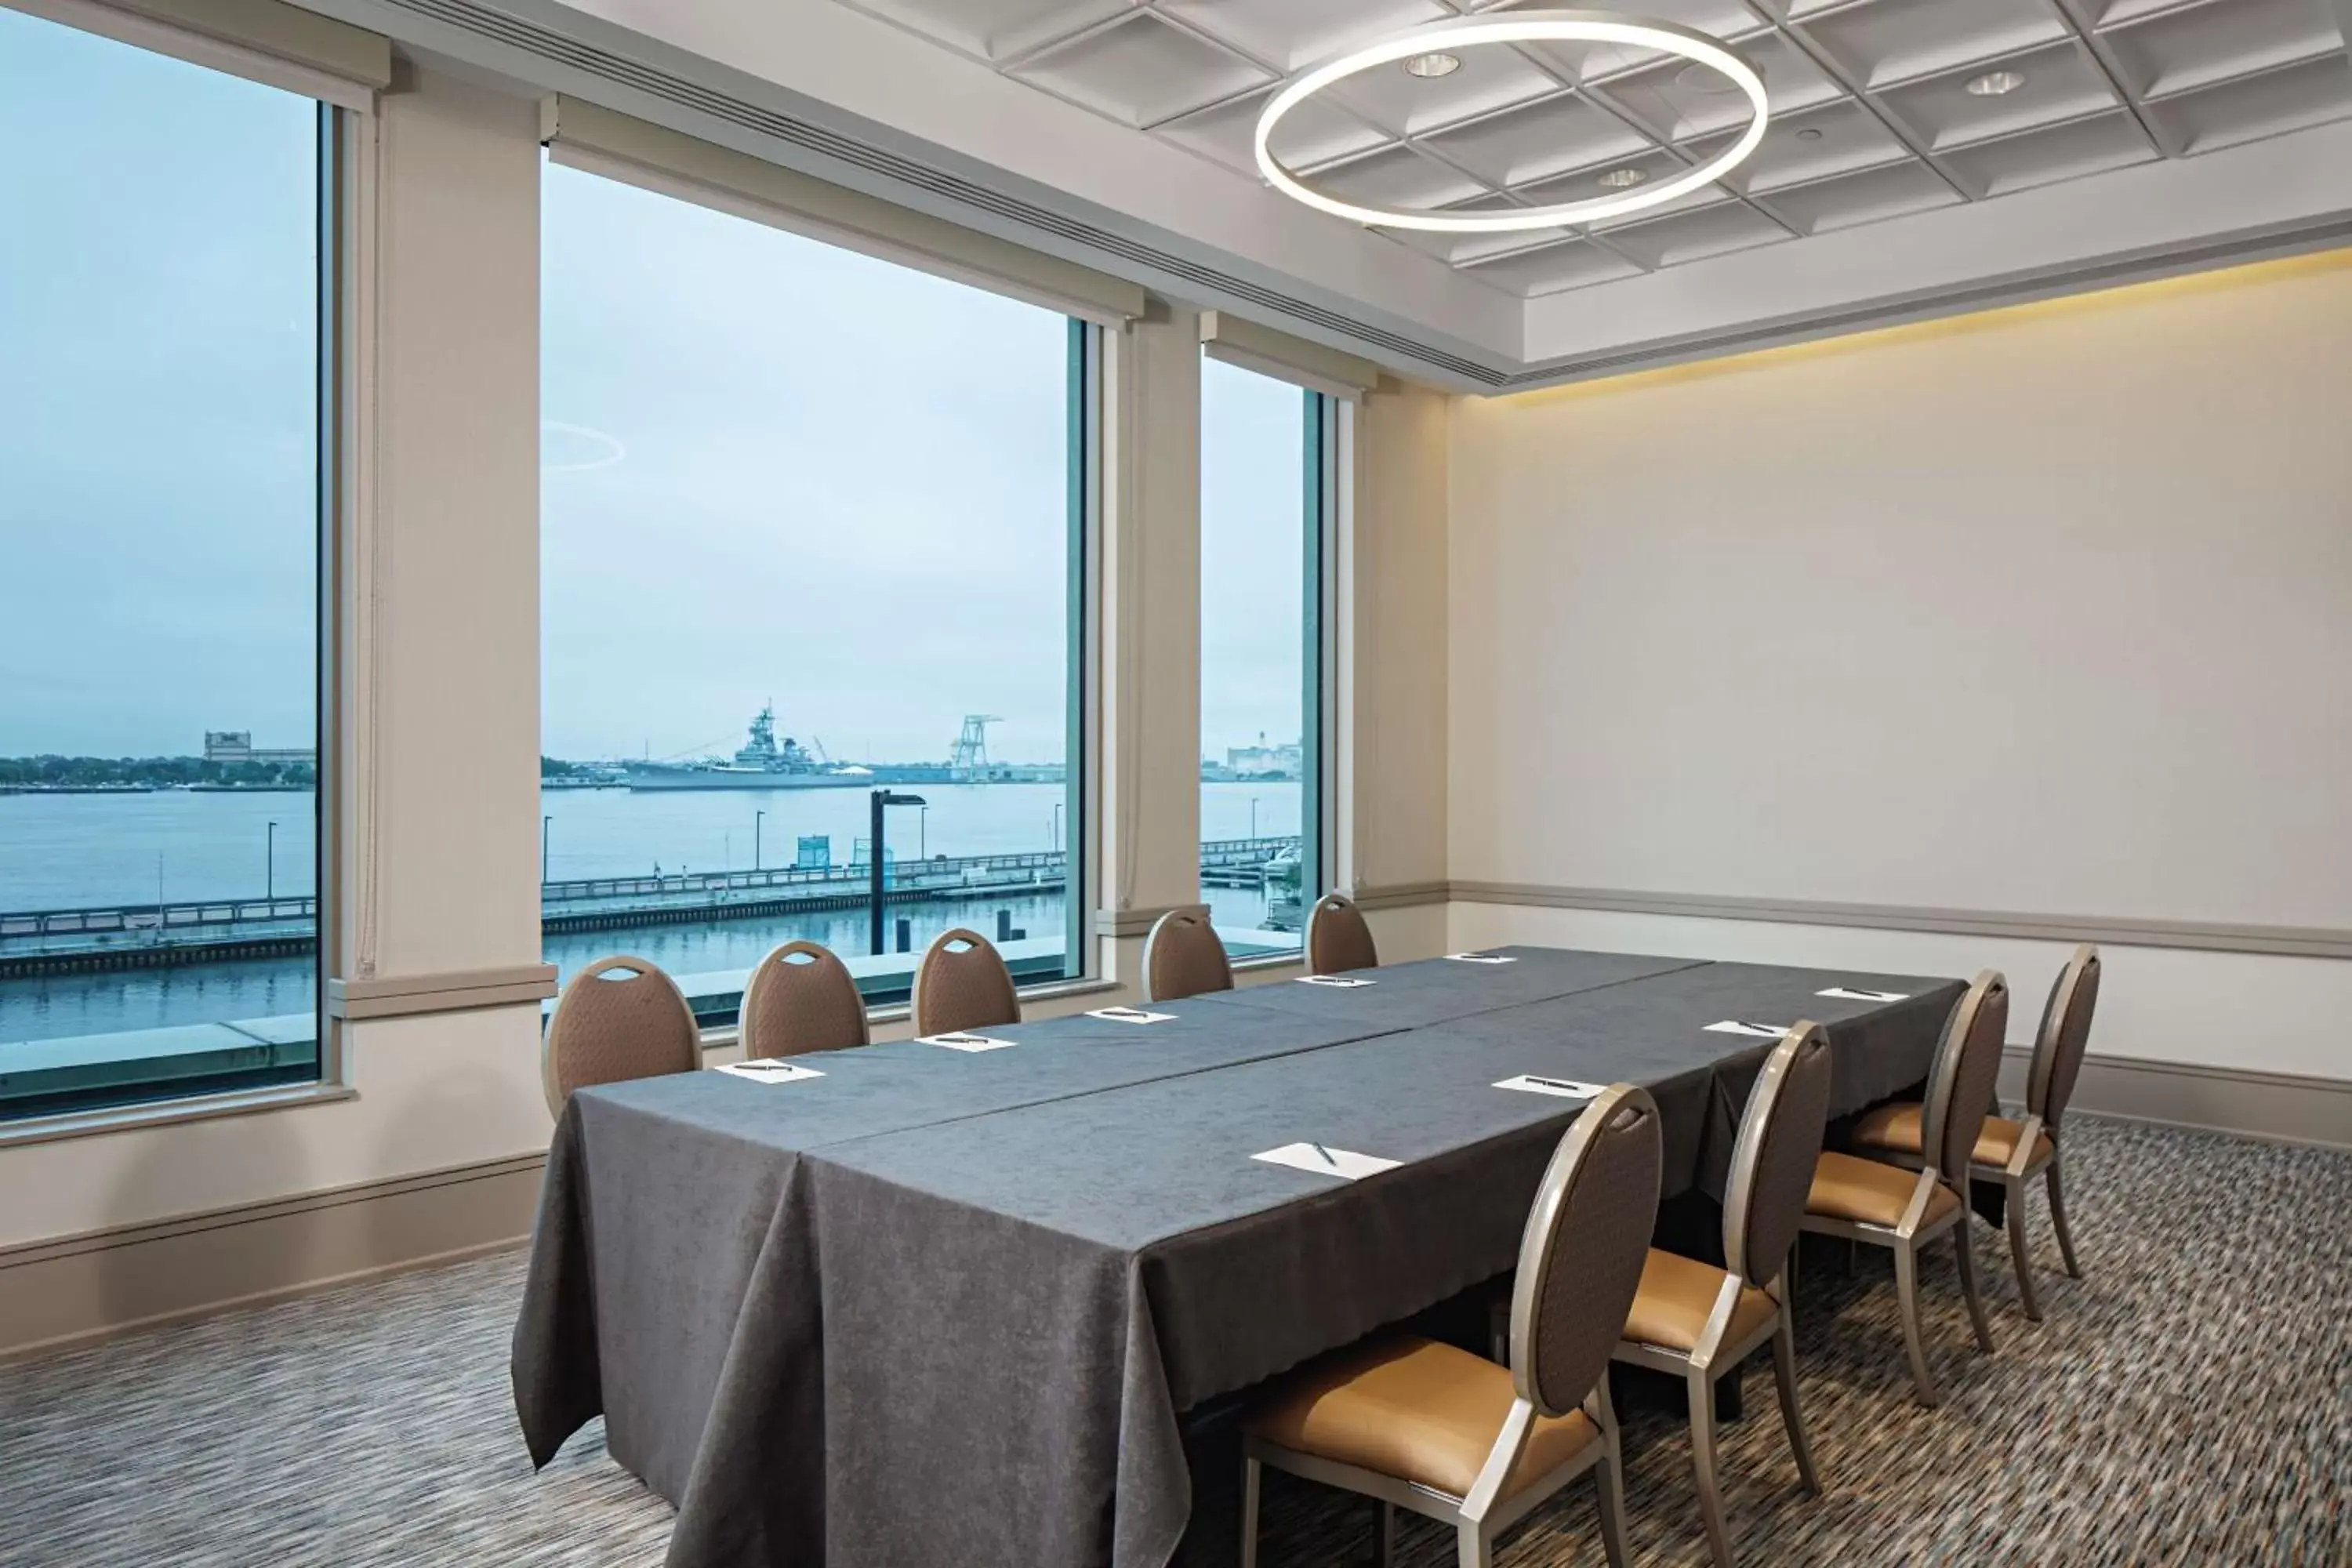 Meeting/conference room in Hilton Philadelphia at Penn's Landing